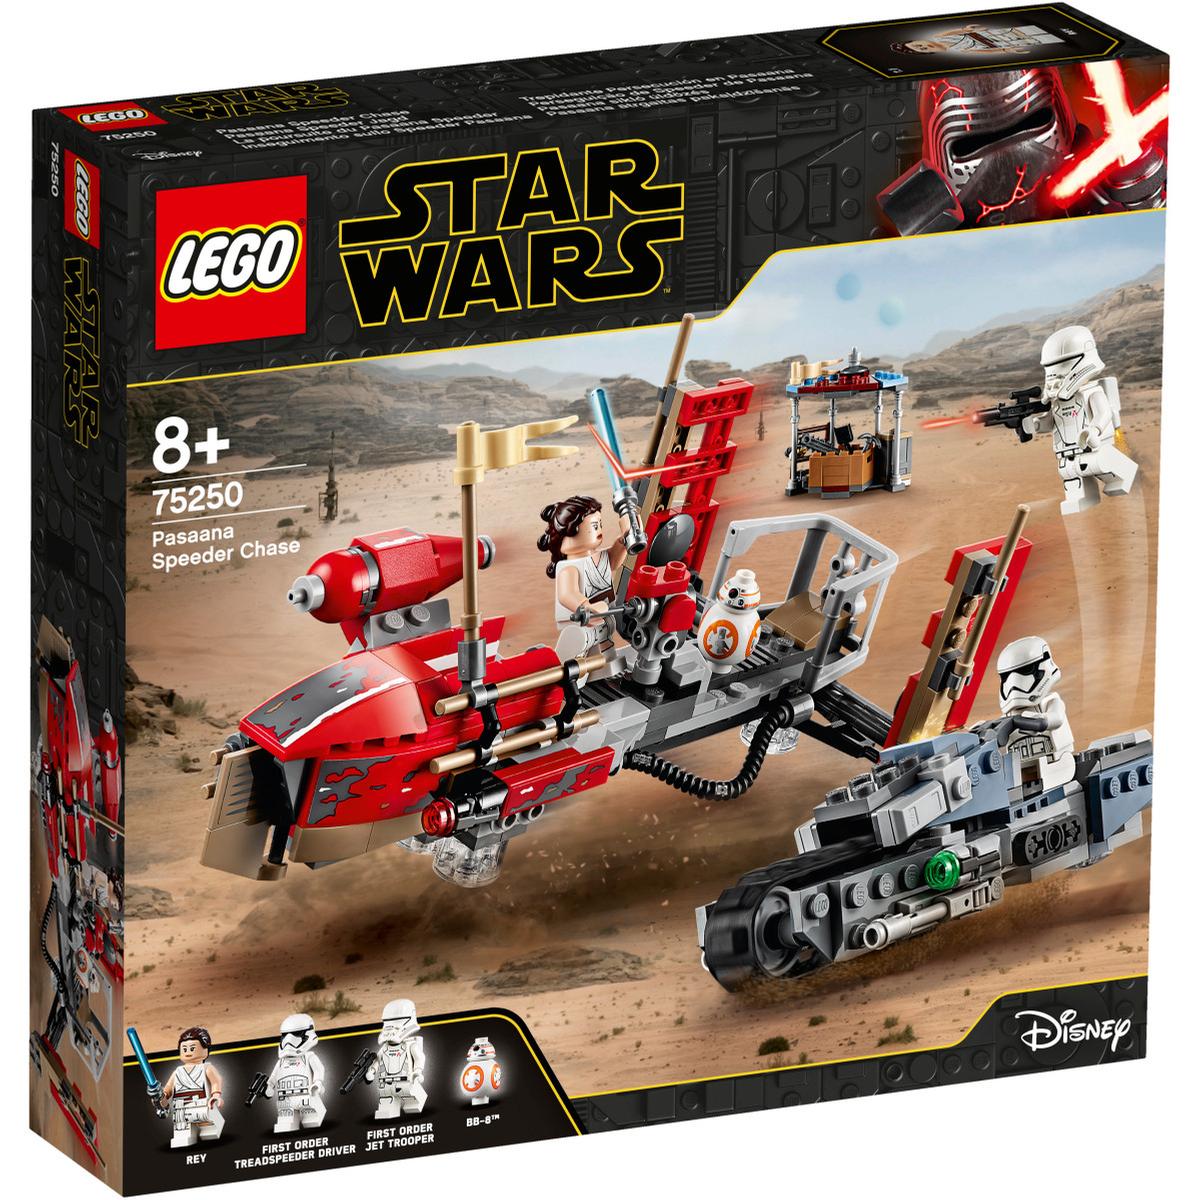 LEGO Star Wars - Trepidante Persecución en Pasaana - 75250 | Star Wars |  Toys"R"Us España